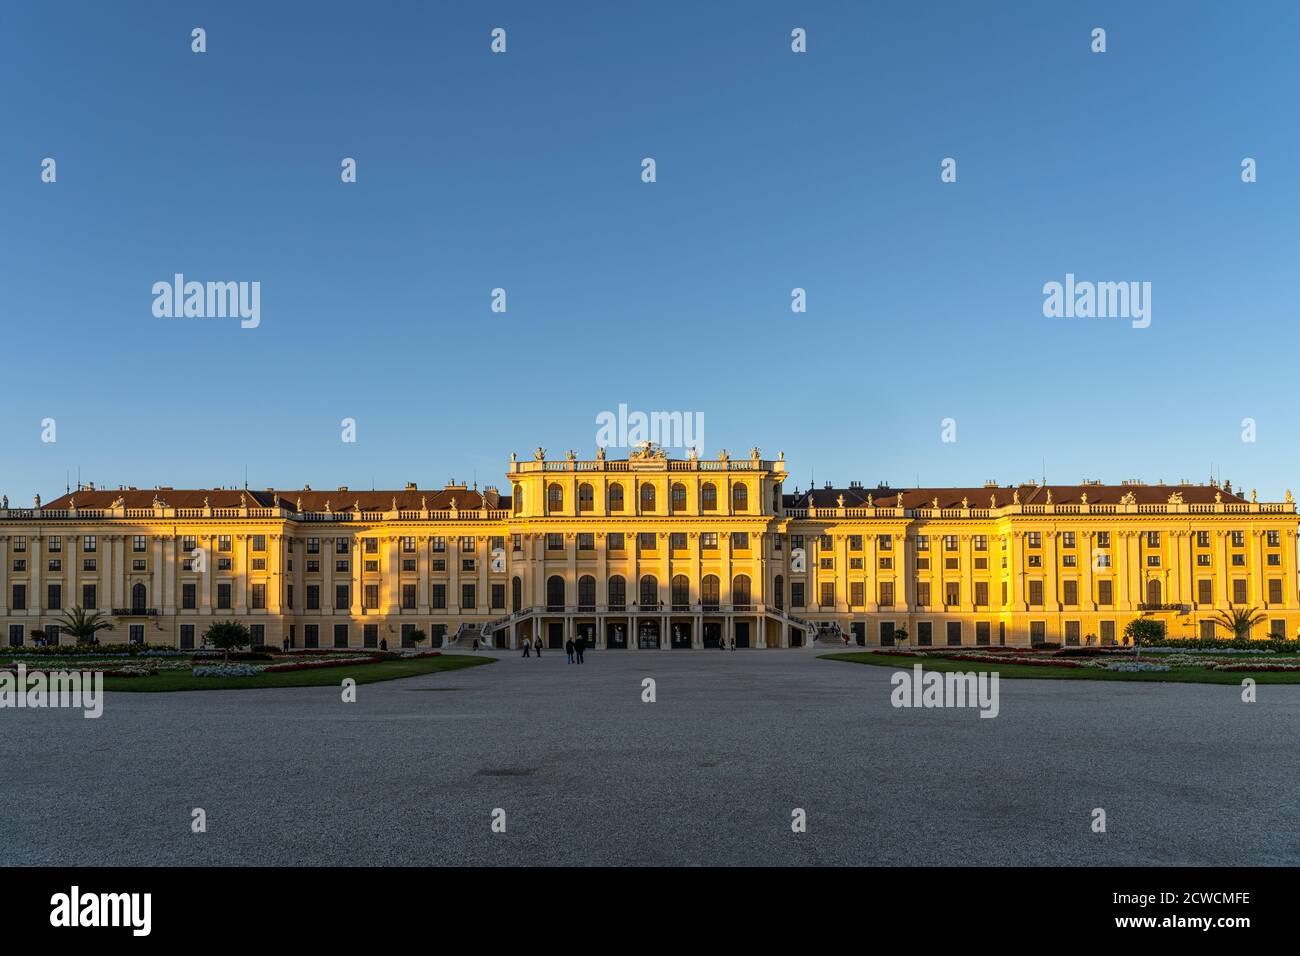 Schloss Schönbrunn, Welterbe de la UNESCO en Viena, Österreich, Europa | Palacio de Schönbrunn, Patrimonio de la Humanidad de la UNESCO en Viena, Austria, Europa Foto de stock